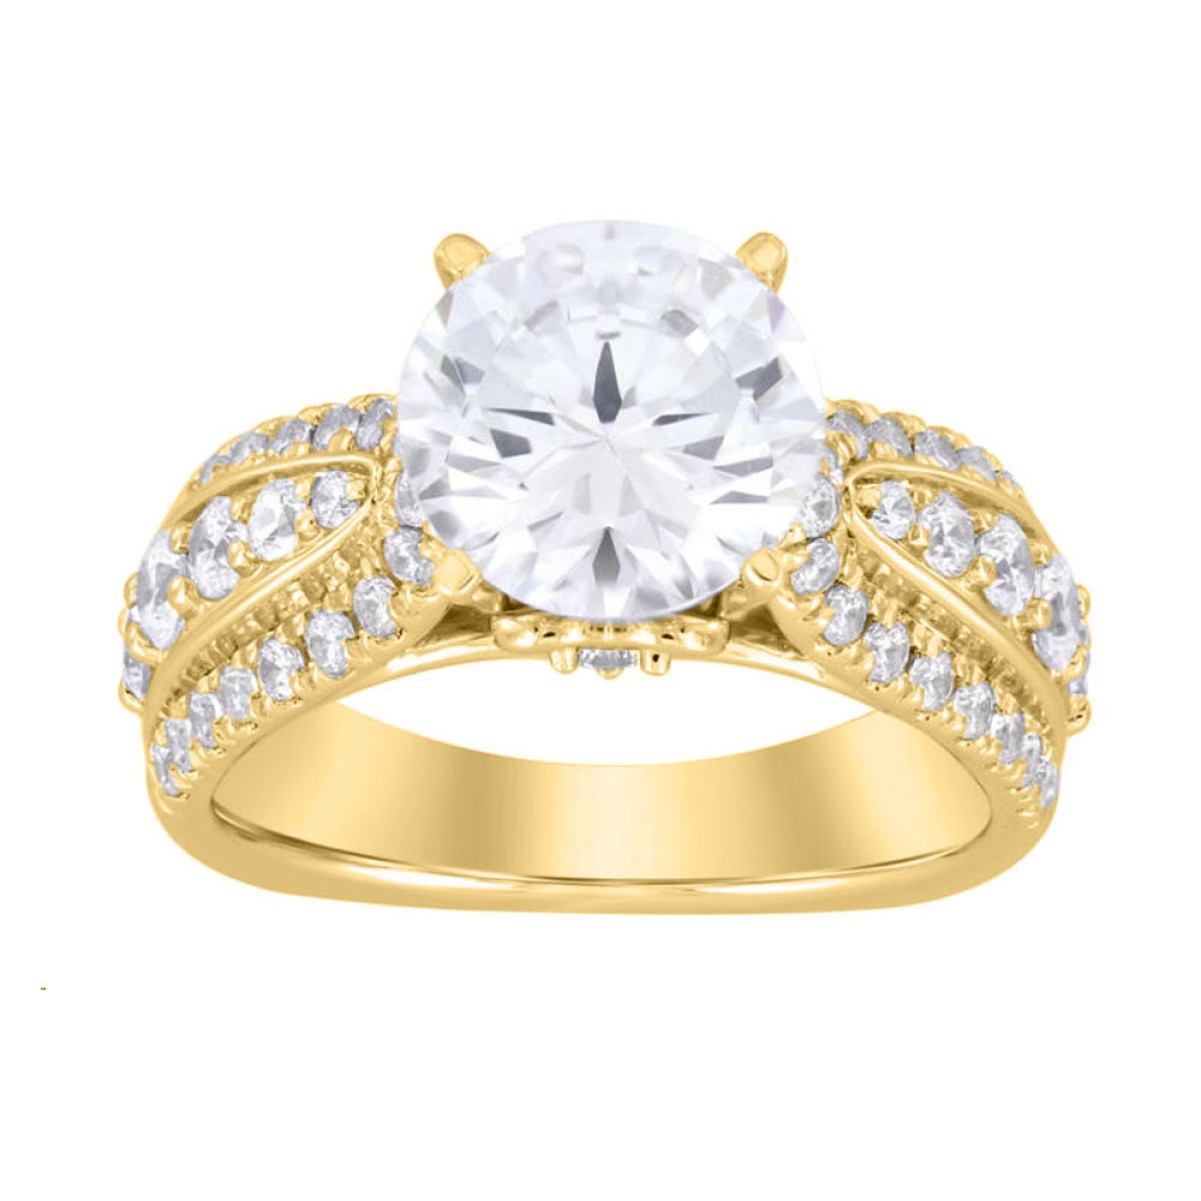 18K YELLOW GOLD 4.00CT ROUND DIAMOND SEMI MOUNT LADIES RING (CENTER STONE ROUND DIAMOND 3.00CT)